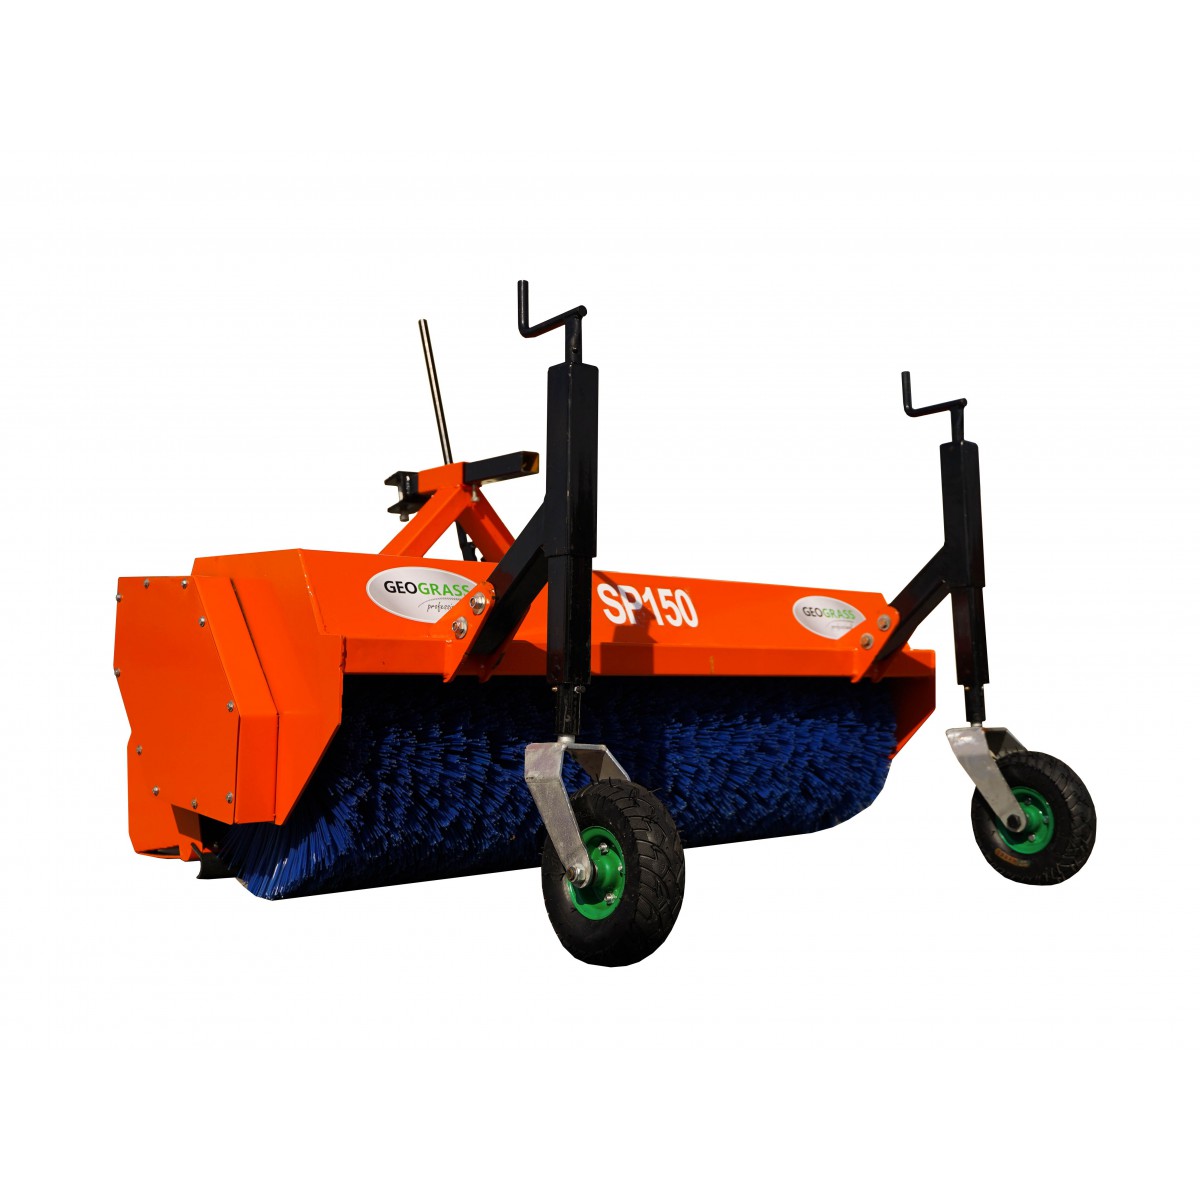 Barredora SP150 para tractor Geograss